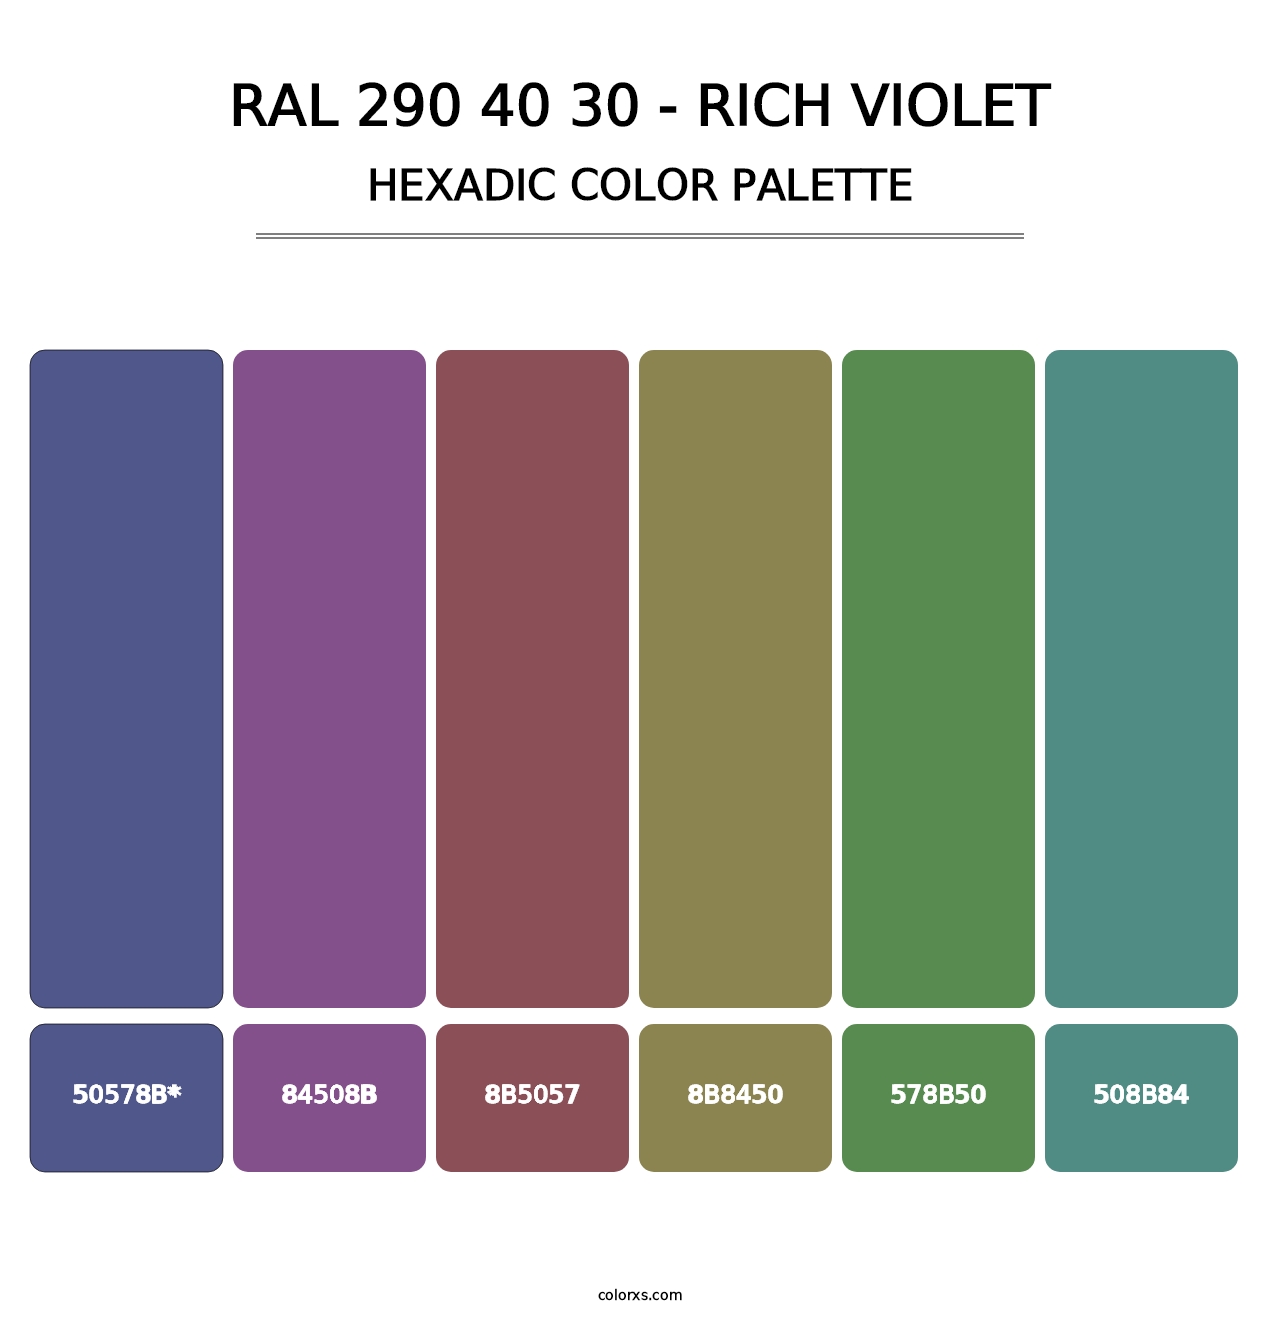 RAL 290 40 30 - Rich Violet - Hexadic Color Palette